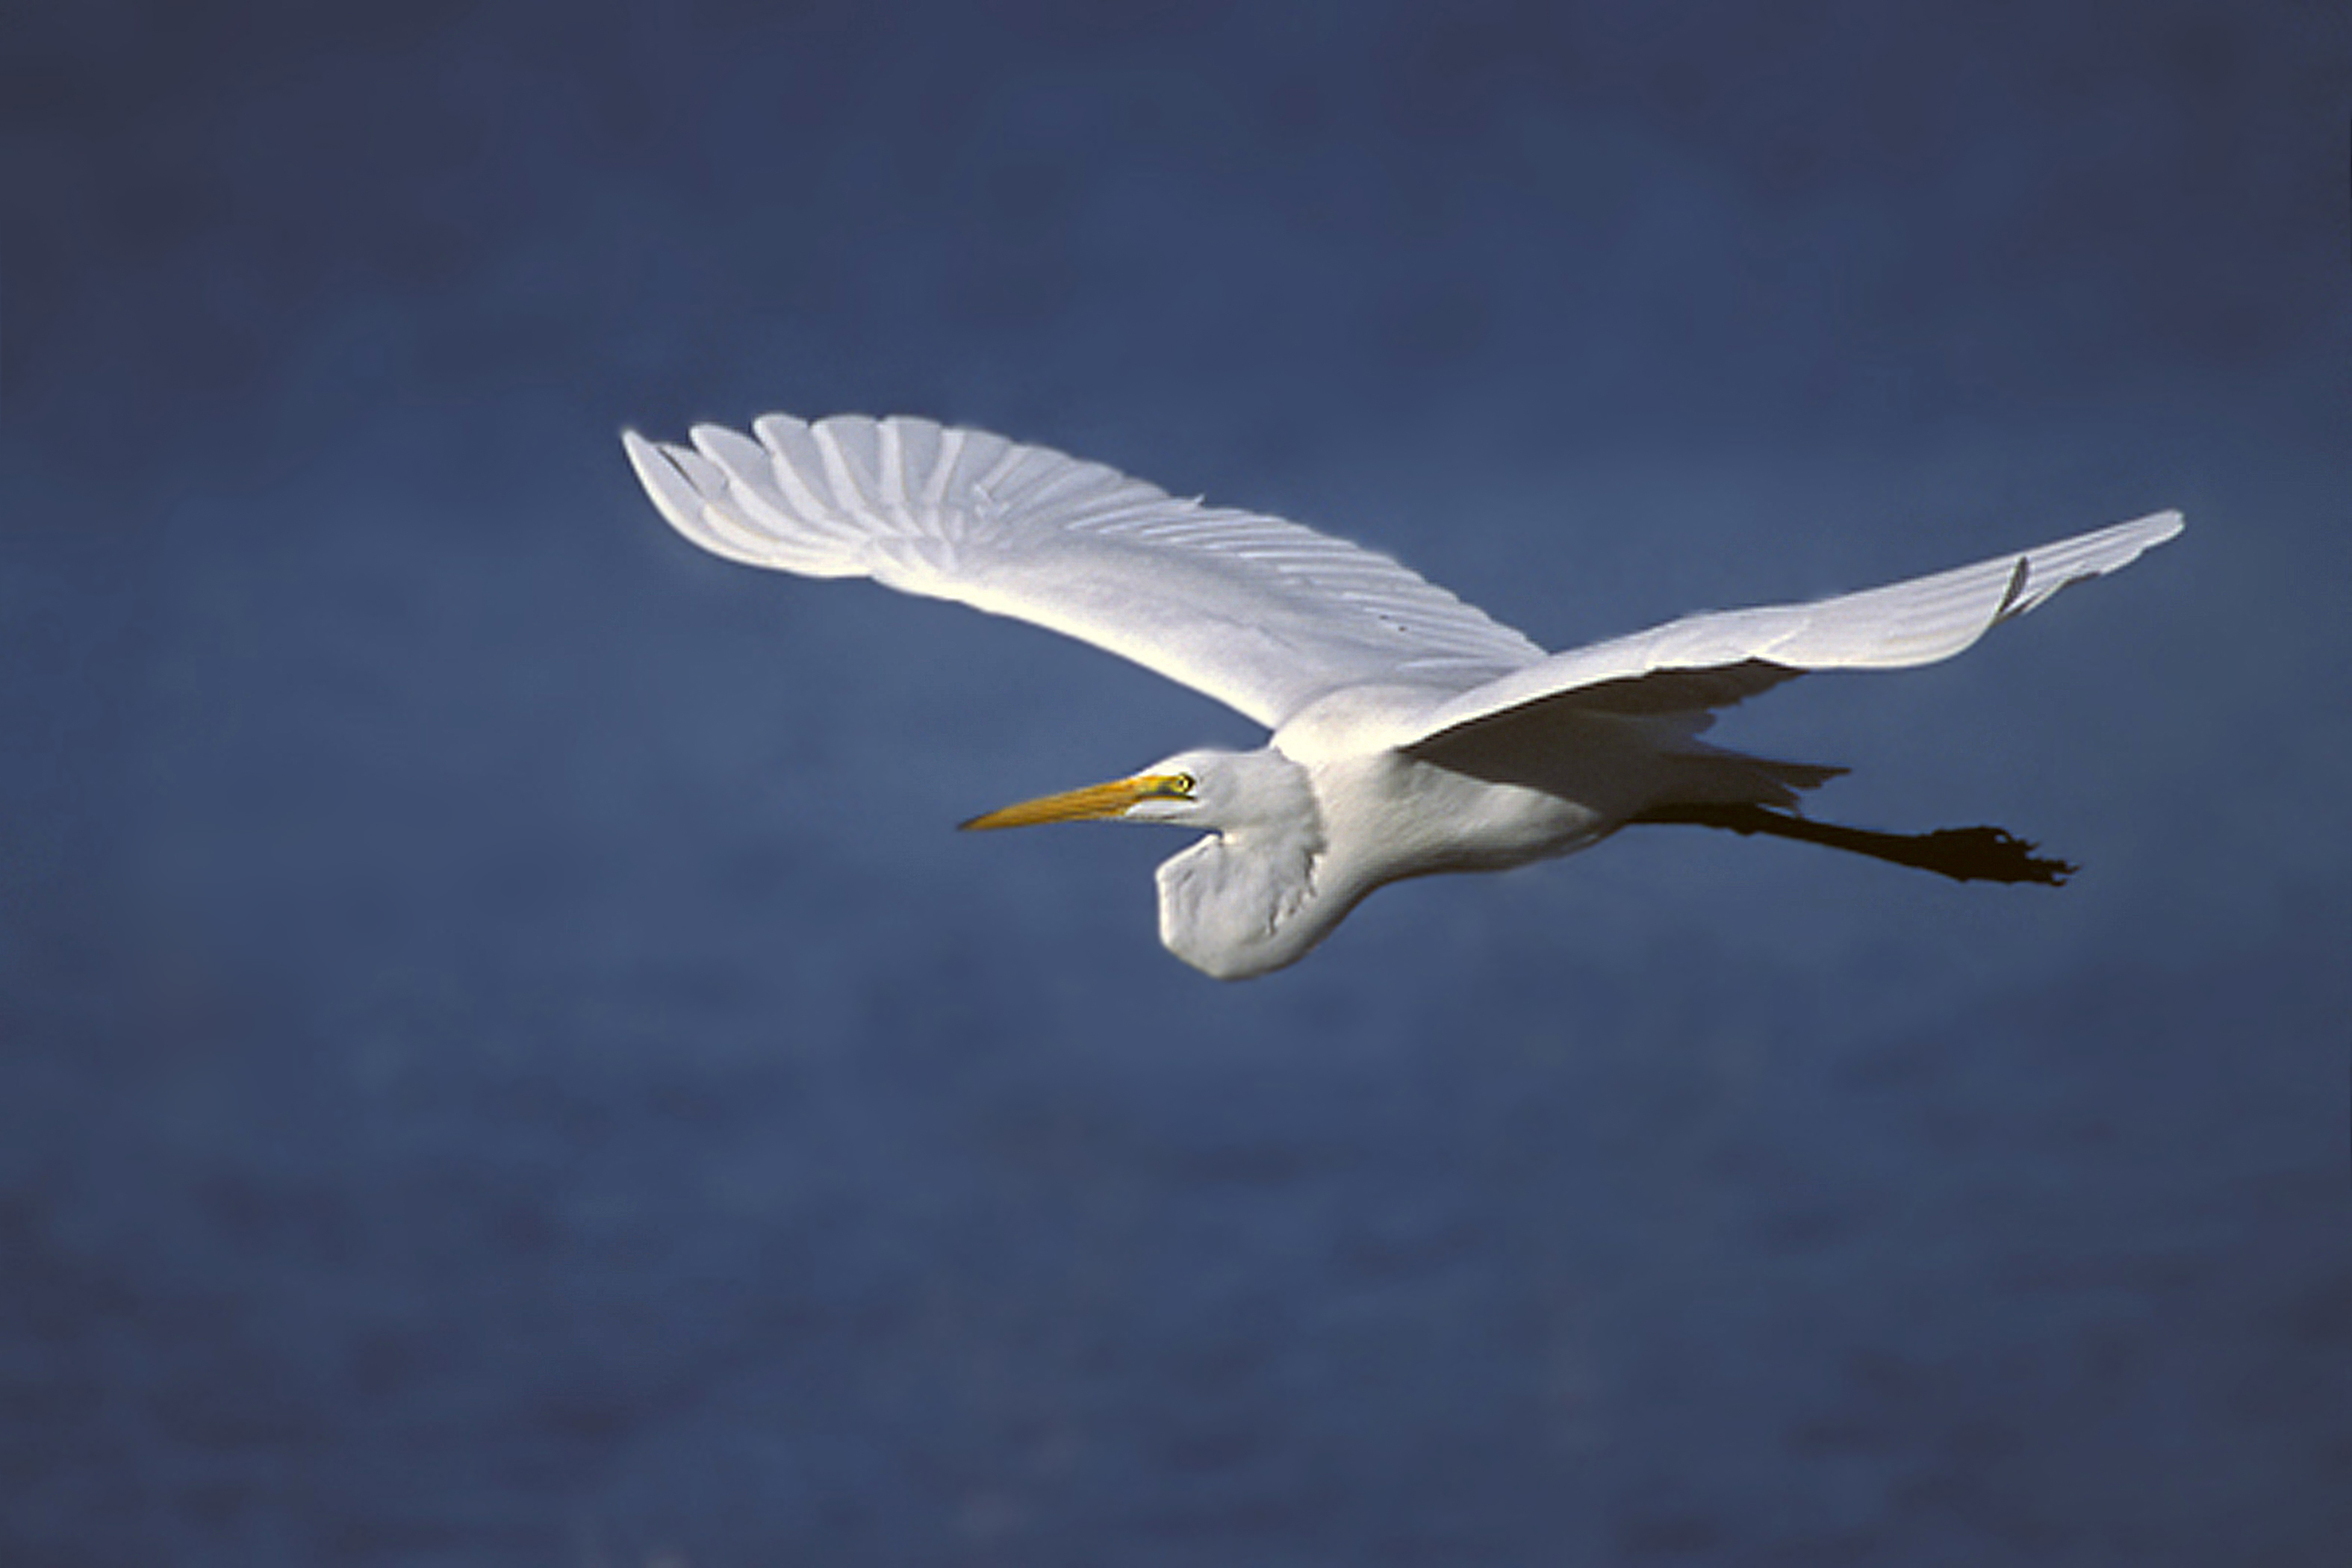 File:Great Egret Flying.jpg - Wikimedia Commons